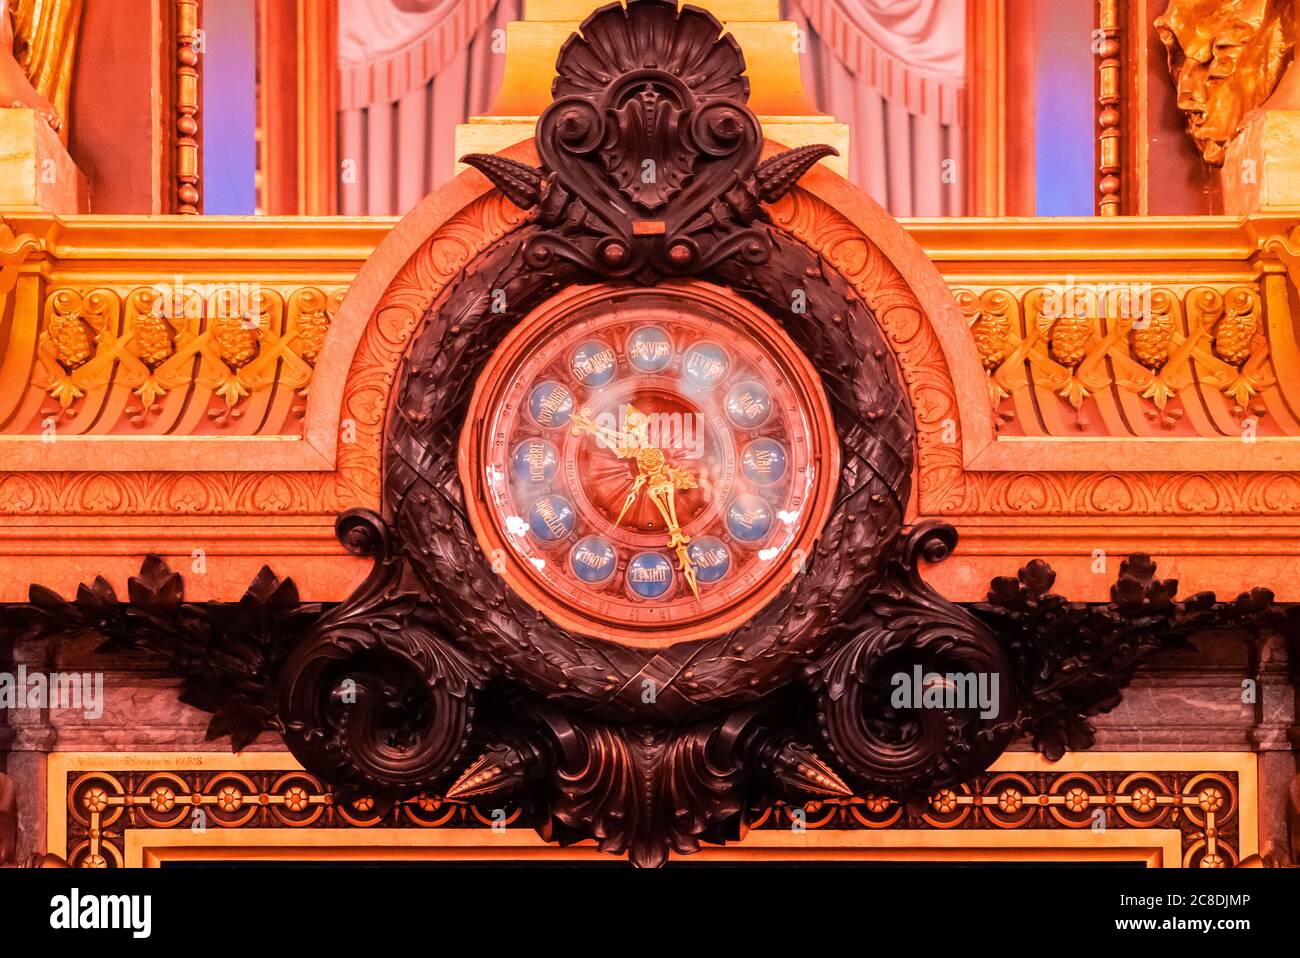 Paris, France - November 14, 2019: Clock in the Opera National de Paris Garnier large foyer Stock Photo